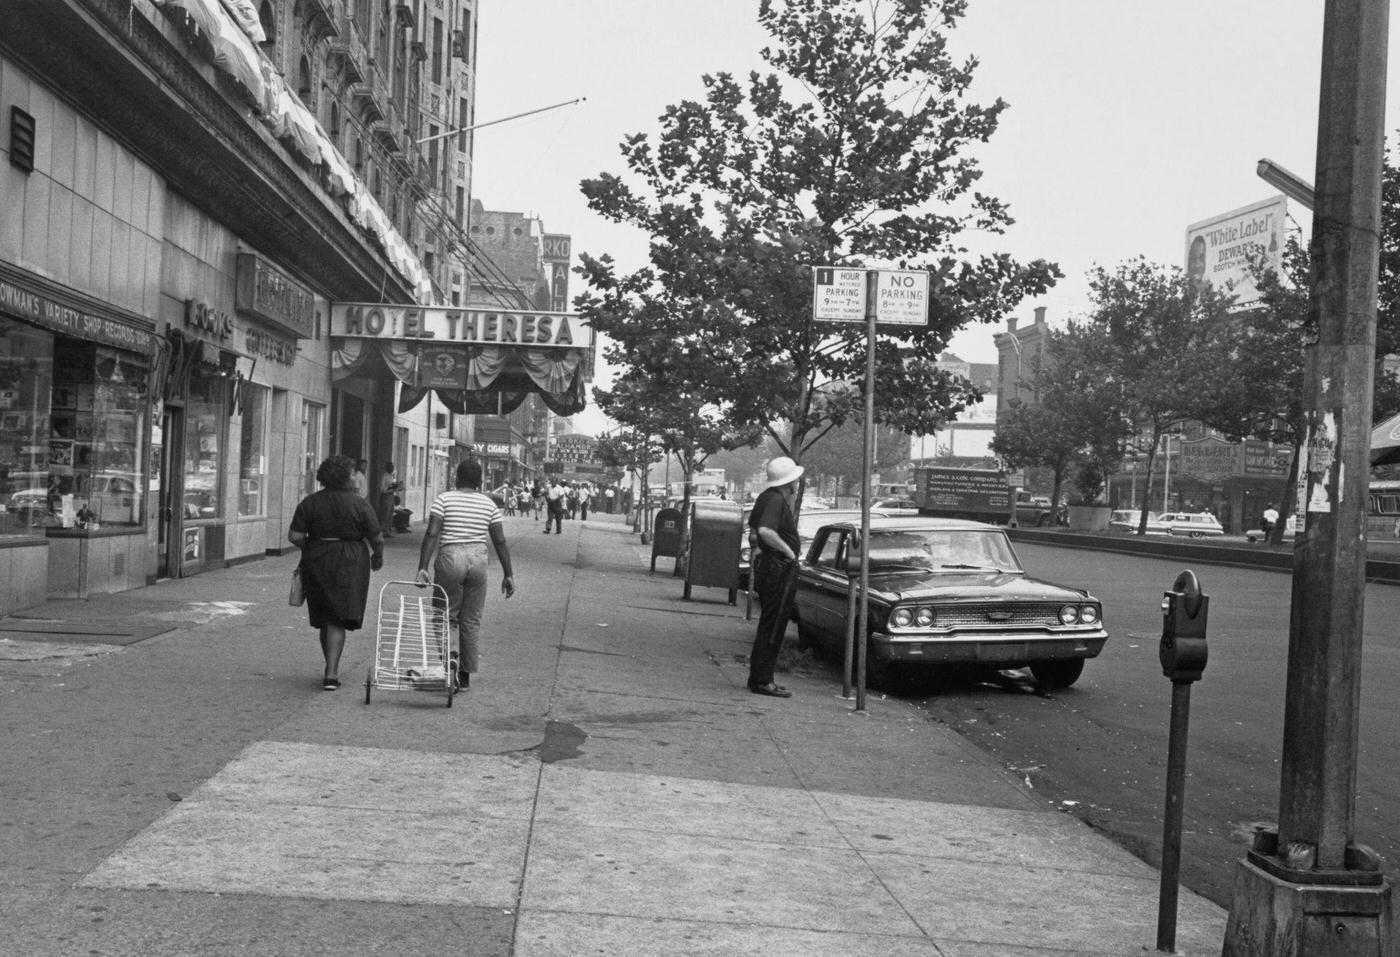 Pedestrians Outside The Hotel Theresa In Harlem, Manhattan, 1964